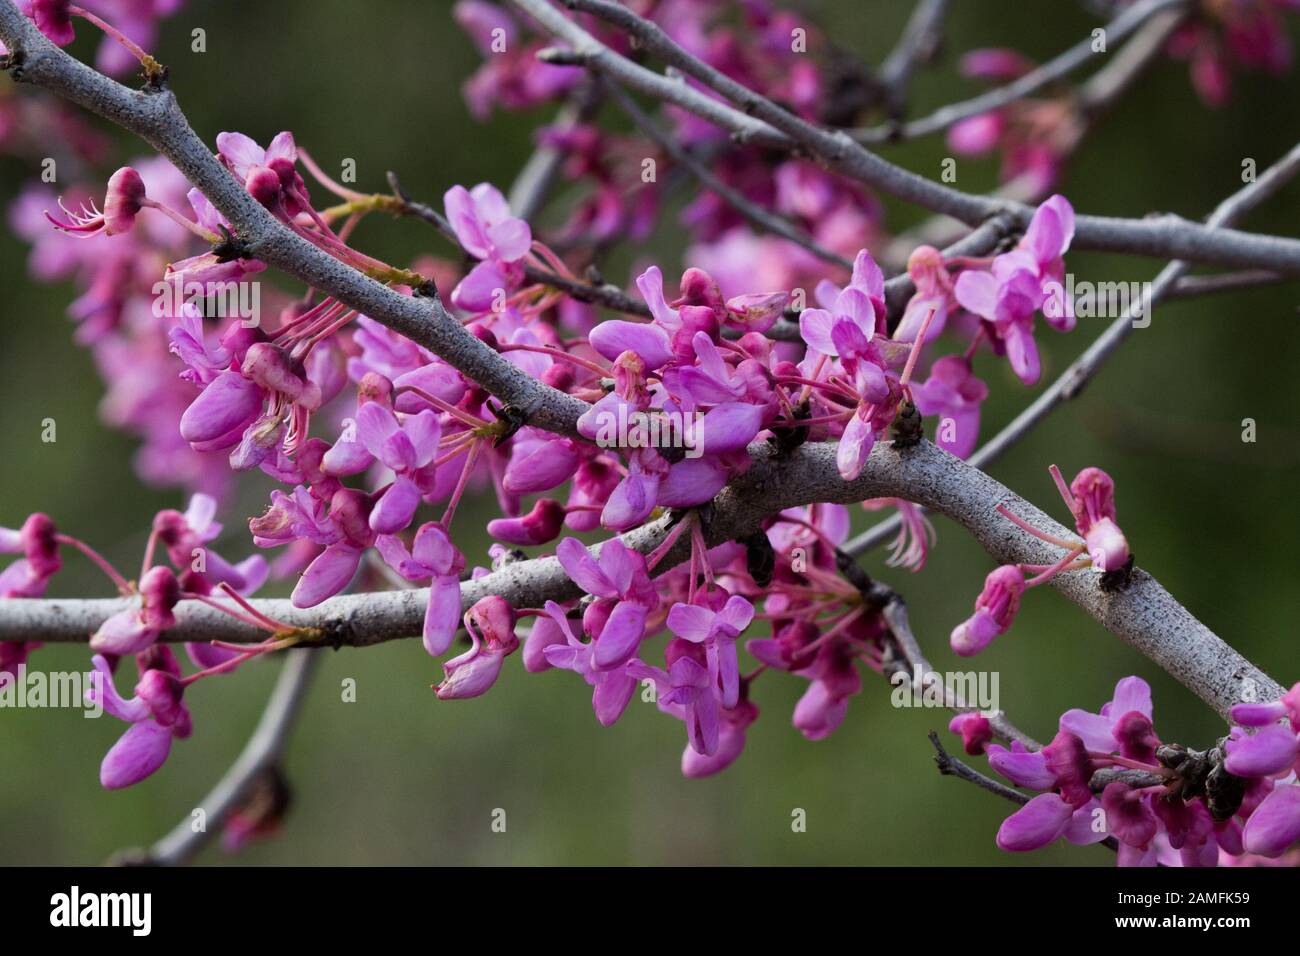 Flowering Judas Tree Cercis siliquastrum Photographed in Israel in February Stock Photo